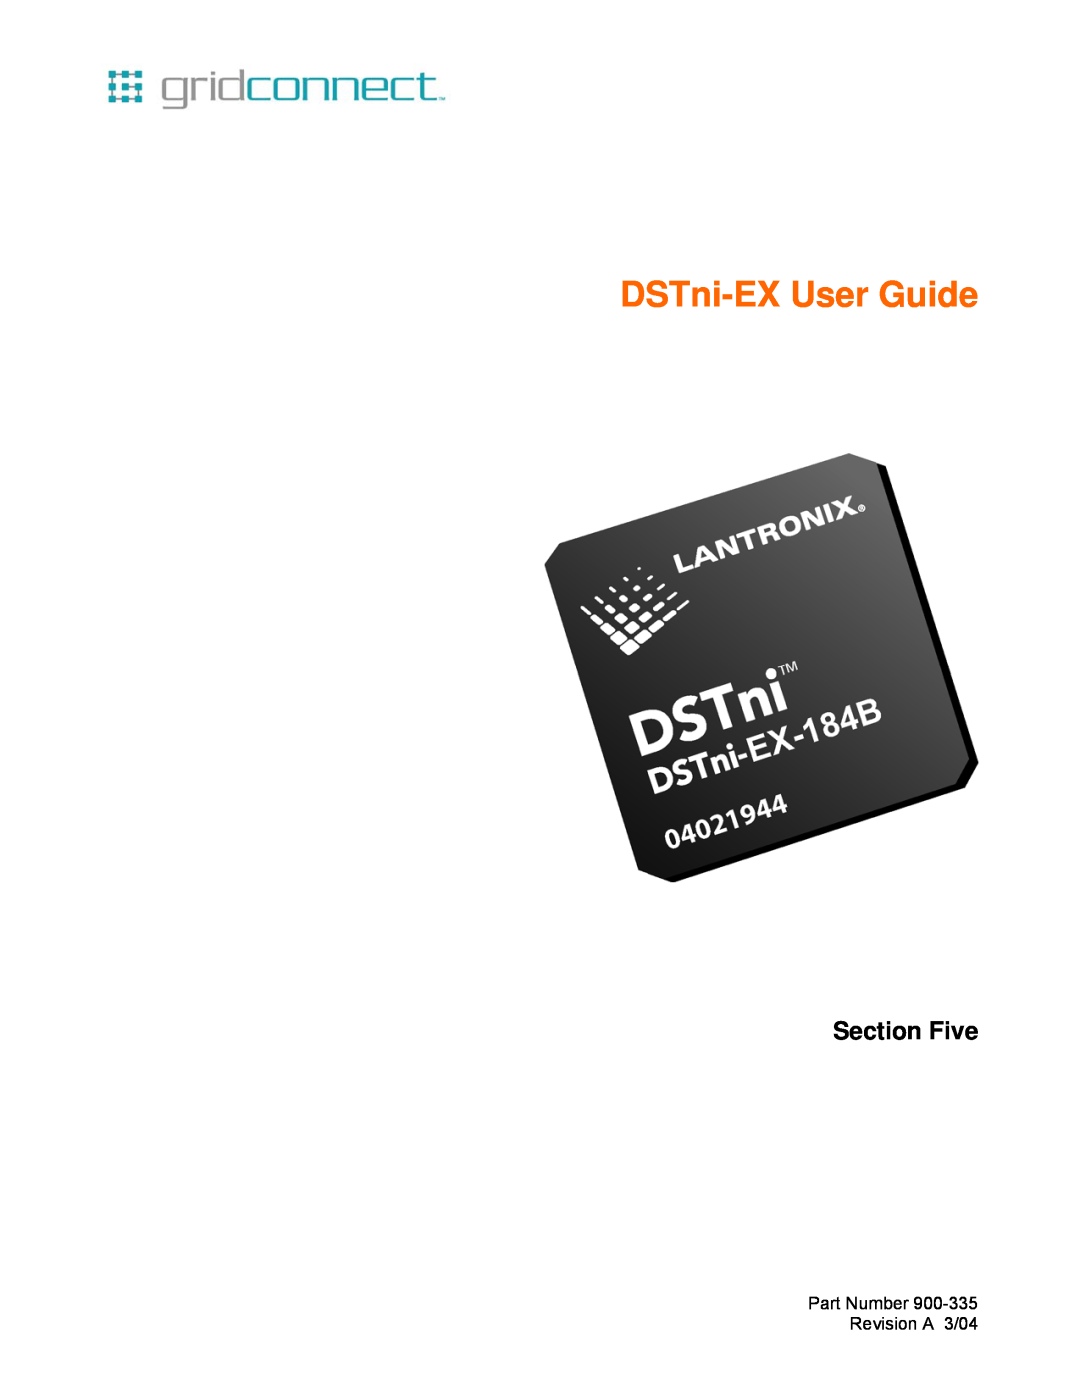 Lantronix manual DSTni-EX User Guide, Section Five 